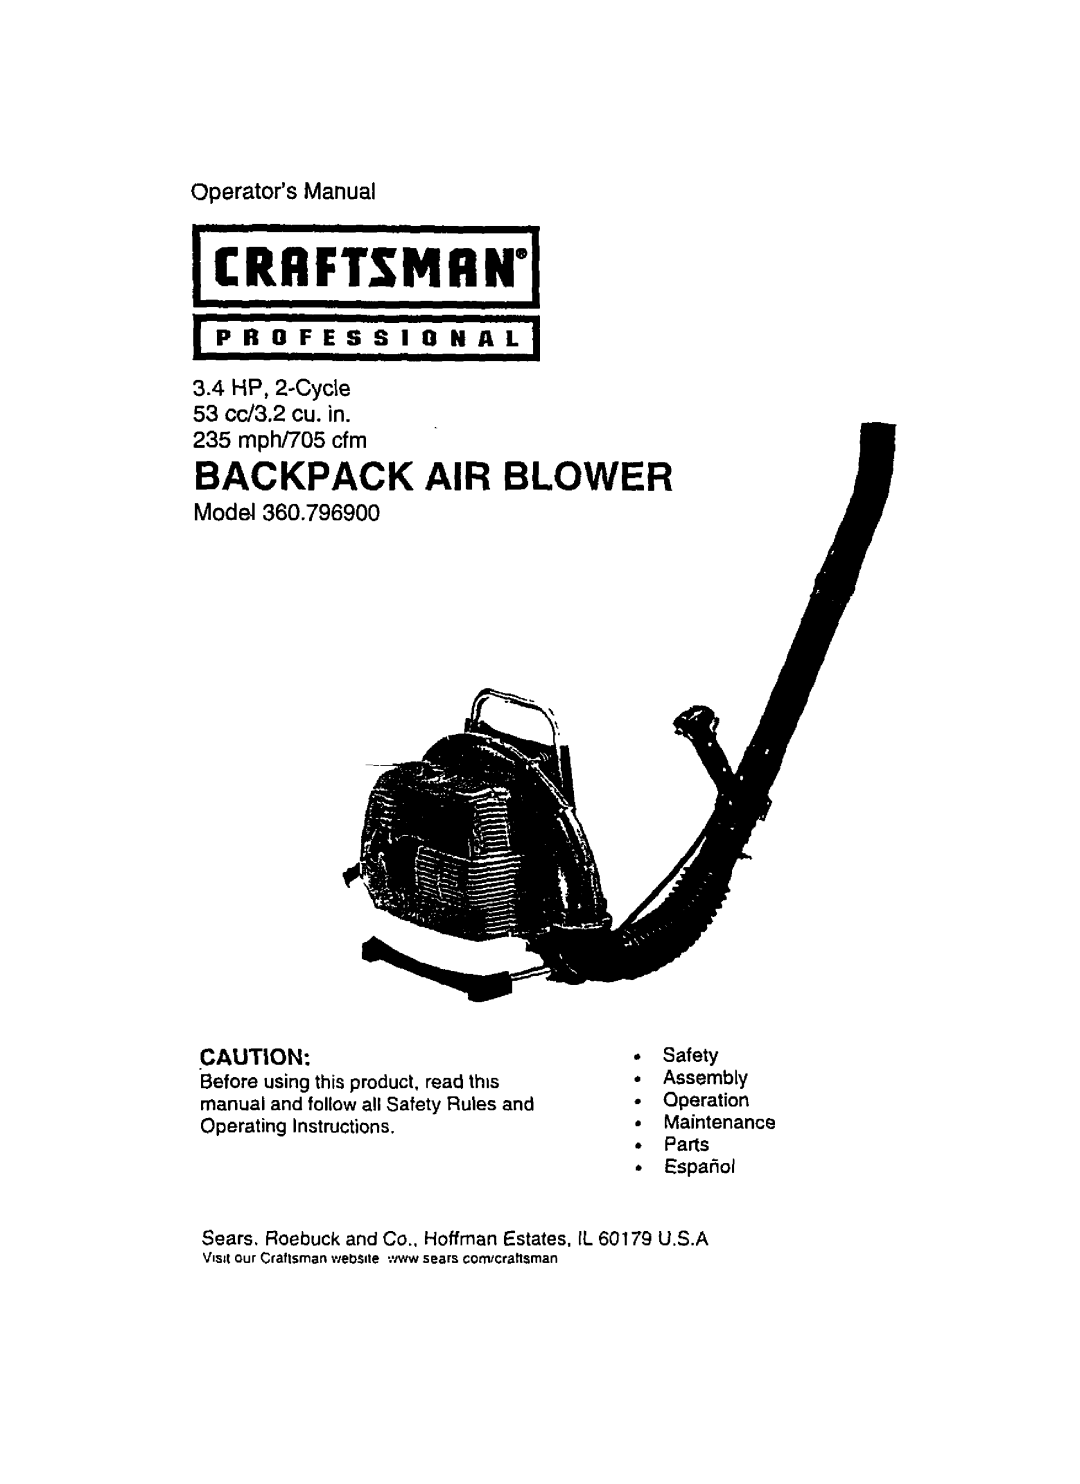 Craftsman 360.7969 manual Operators Manual 3.4HP, 2-Cycle53 cc/3.2 cu. in, 235 mph/705 cfm, Model, Maintenance Parts 